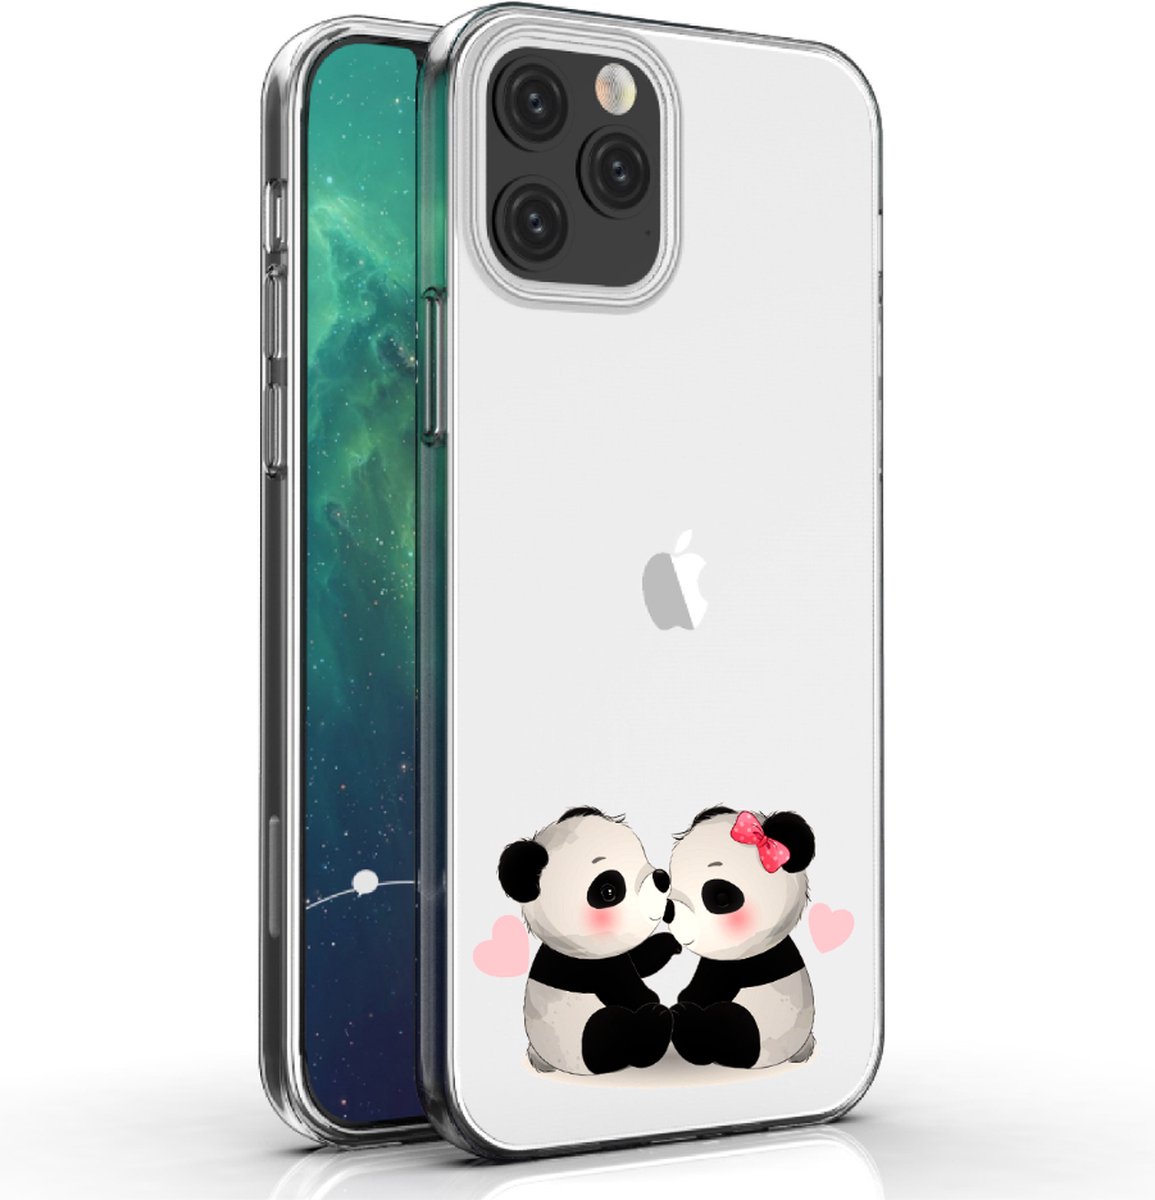 Apple Iphone 12 Pro Max telefoonhoesje transparant siliconen hoesje - Pandabeertjes